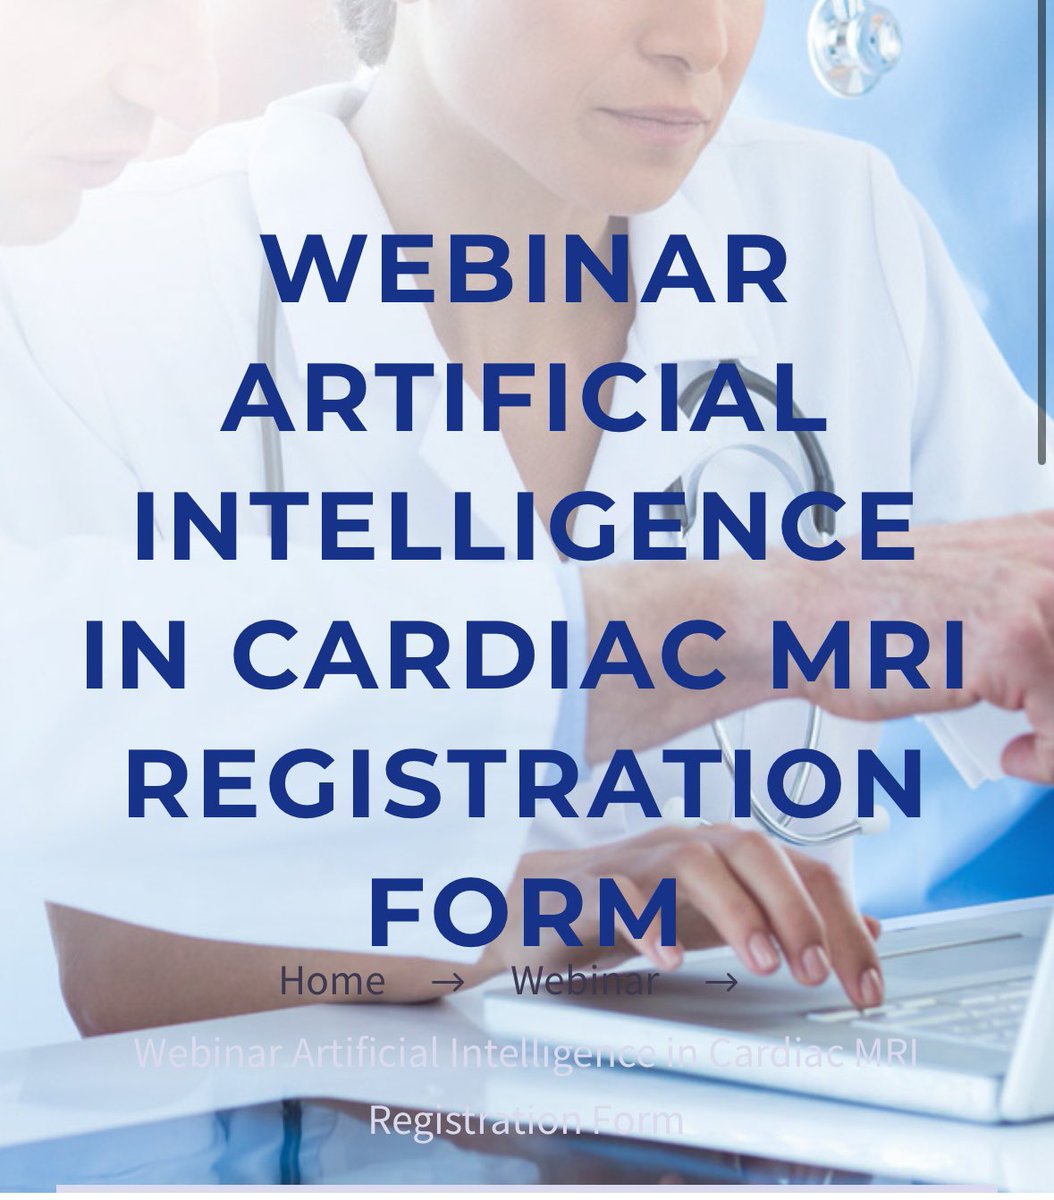 New Webinar 👨🏿‍💻👩🏾‍💻👩🏻‍💻 “Artificial Intelligence in Cardiac MRI” 🧲. 15th April 6-7pm. Thanks to @DrJHoward and @kavitha_varan BSCMR comms team @T_Naneishvili @gabycaptur @mengshi125 BSCMR president @ColinBerryMD Follow the link for registration 👇🏻tinyurl.com/Webinararrintel